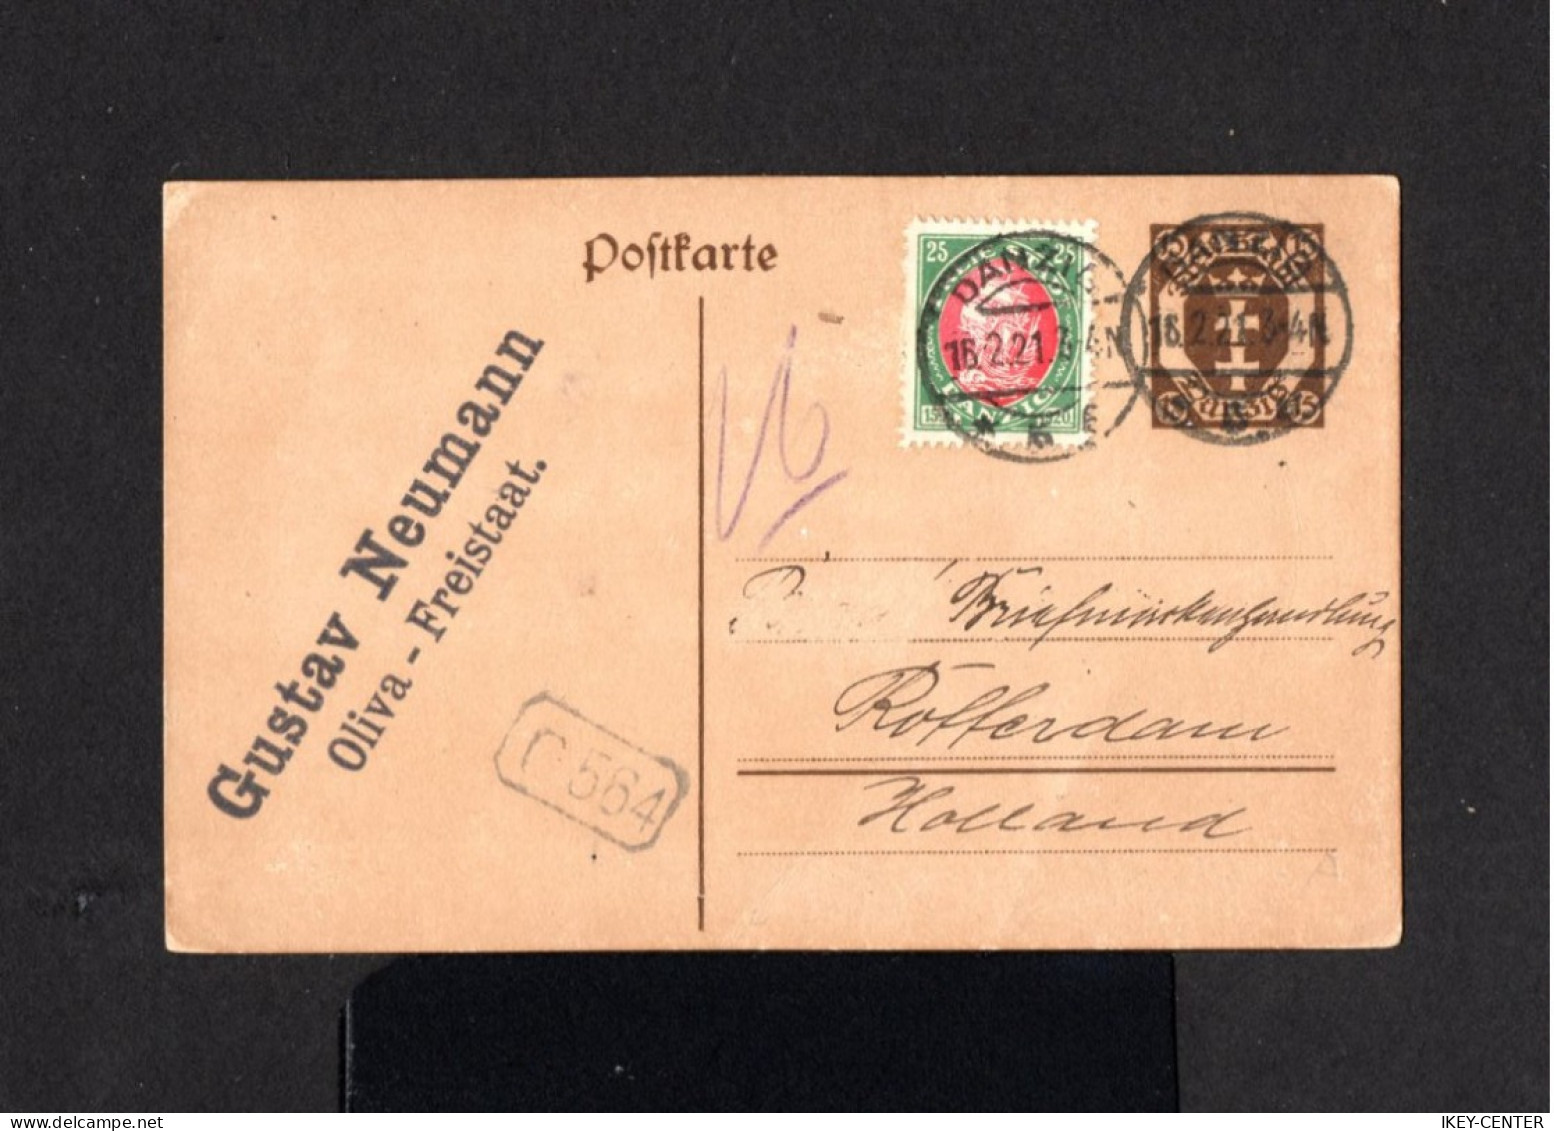 13523-DANZIG FREE STADT-OLD POSTCARD DANZIG To ROTTERDAM (holland).1921.Carte Postale.GERMANY. - Ganzsachen